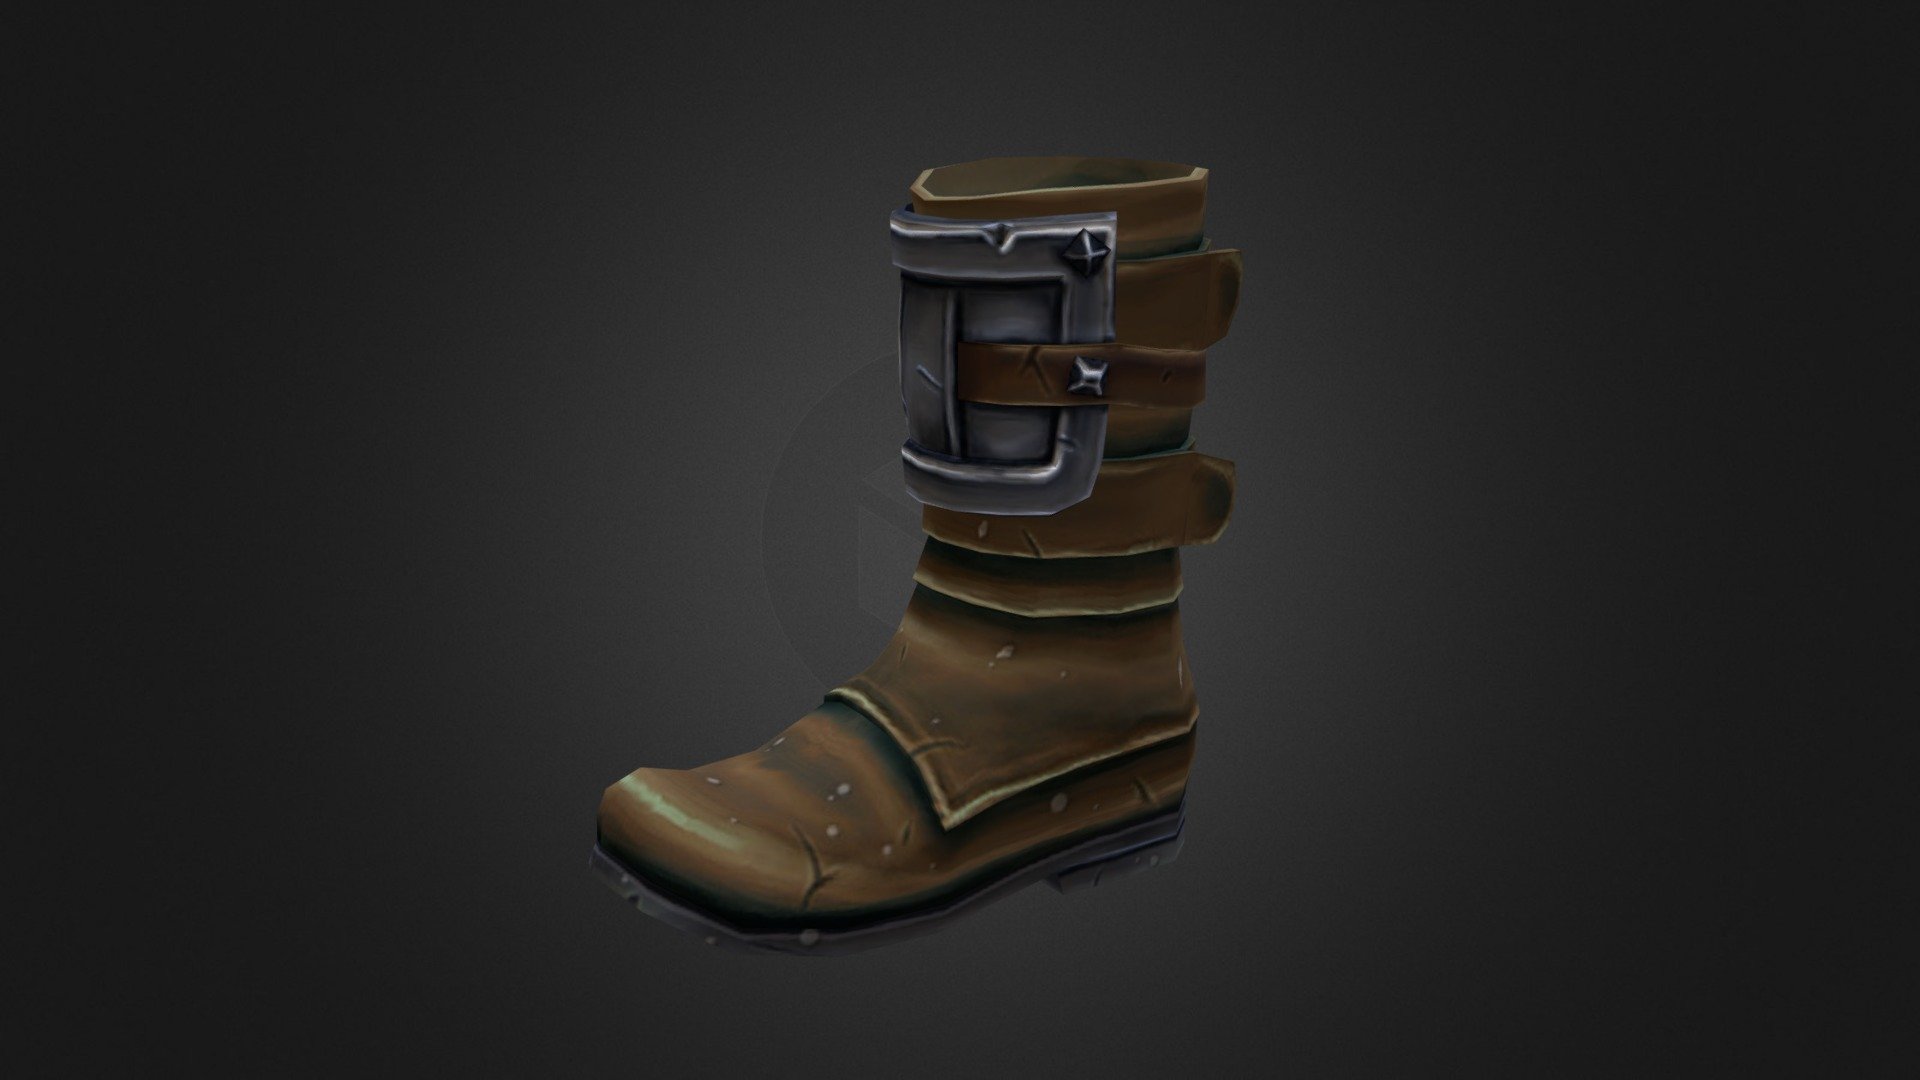 modeled in blender, painted in gimp - Leather boots - 3D model by KB 3d model